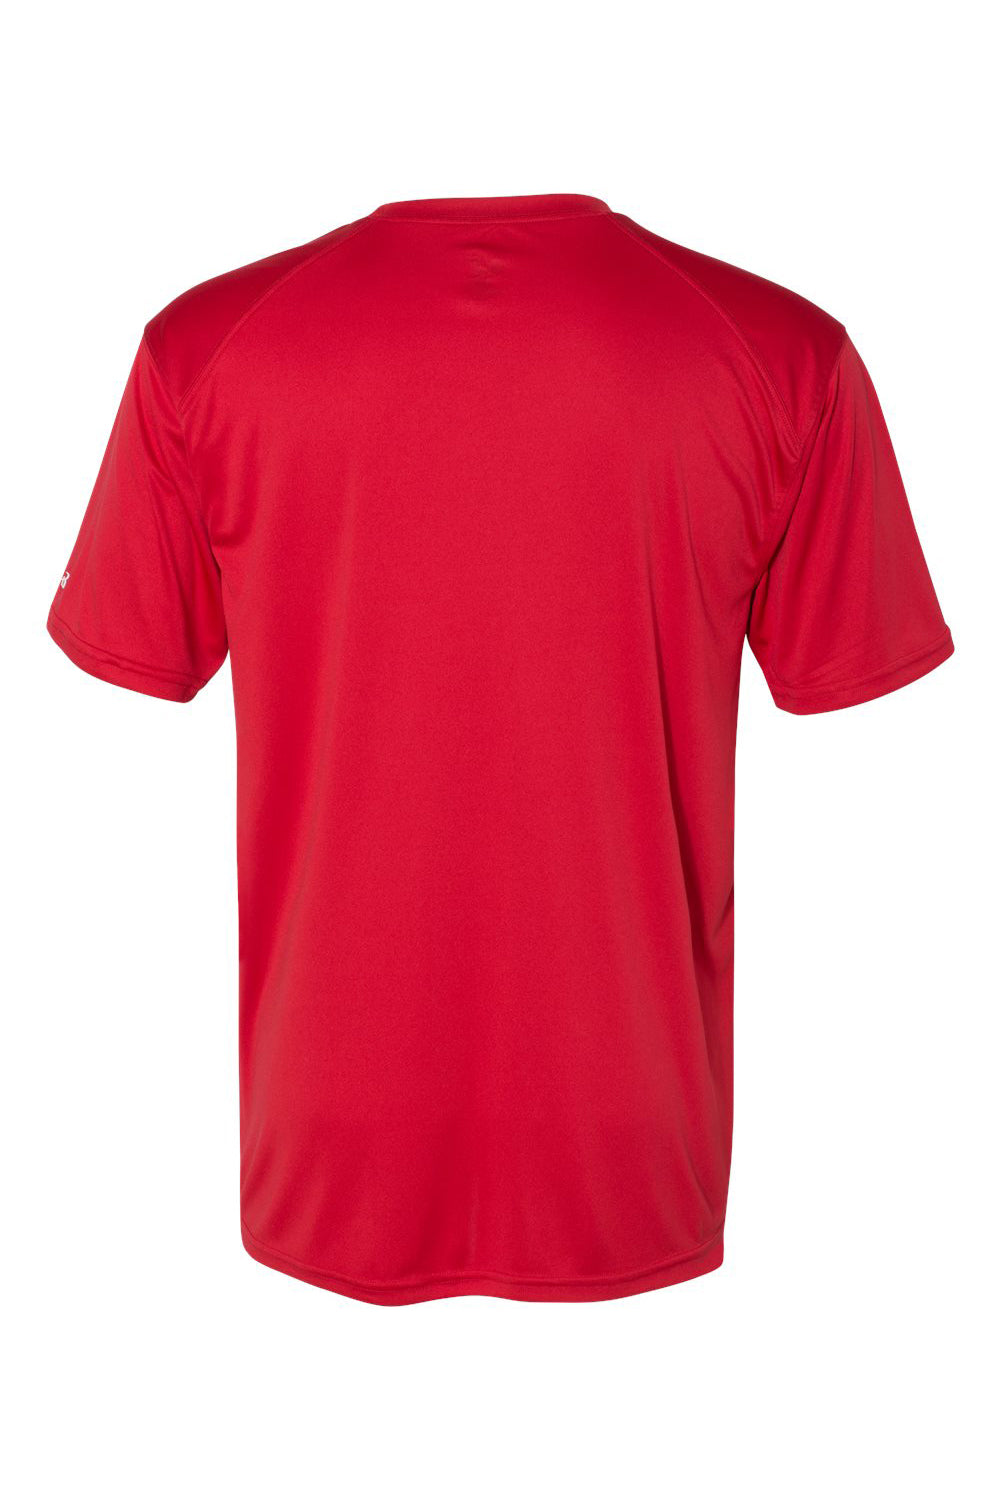 Badger 4020 Mens Ultimate SoftLock Moisture Wicking Short Sleeve Crewneck T-Shirt Red Flat Back